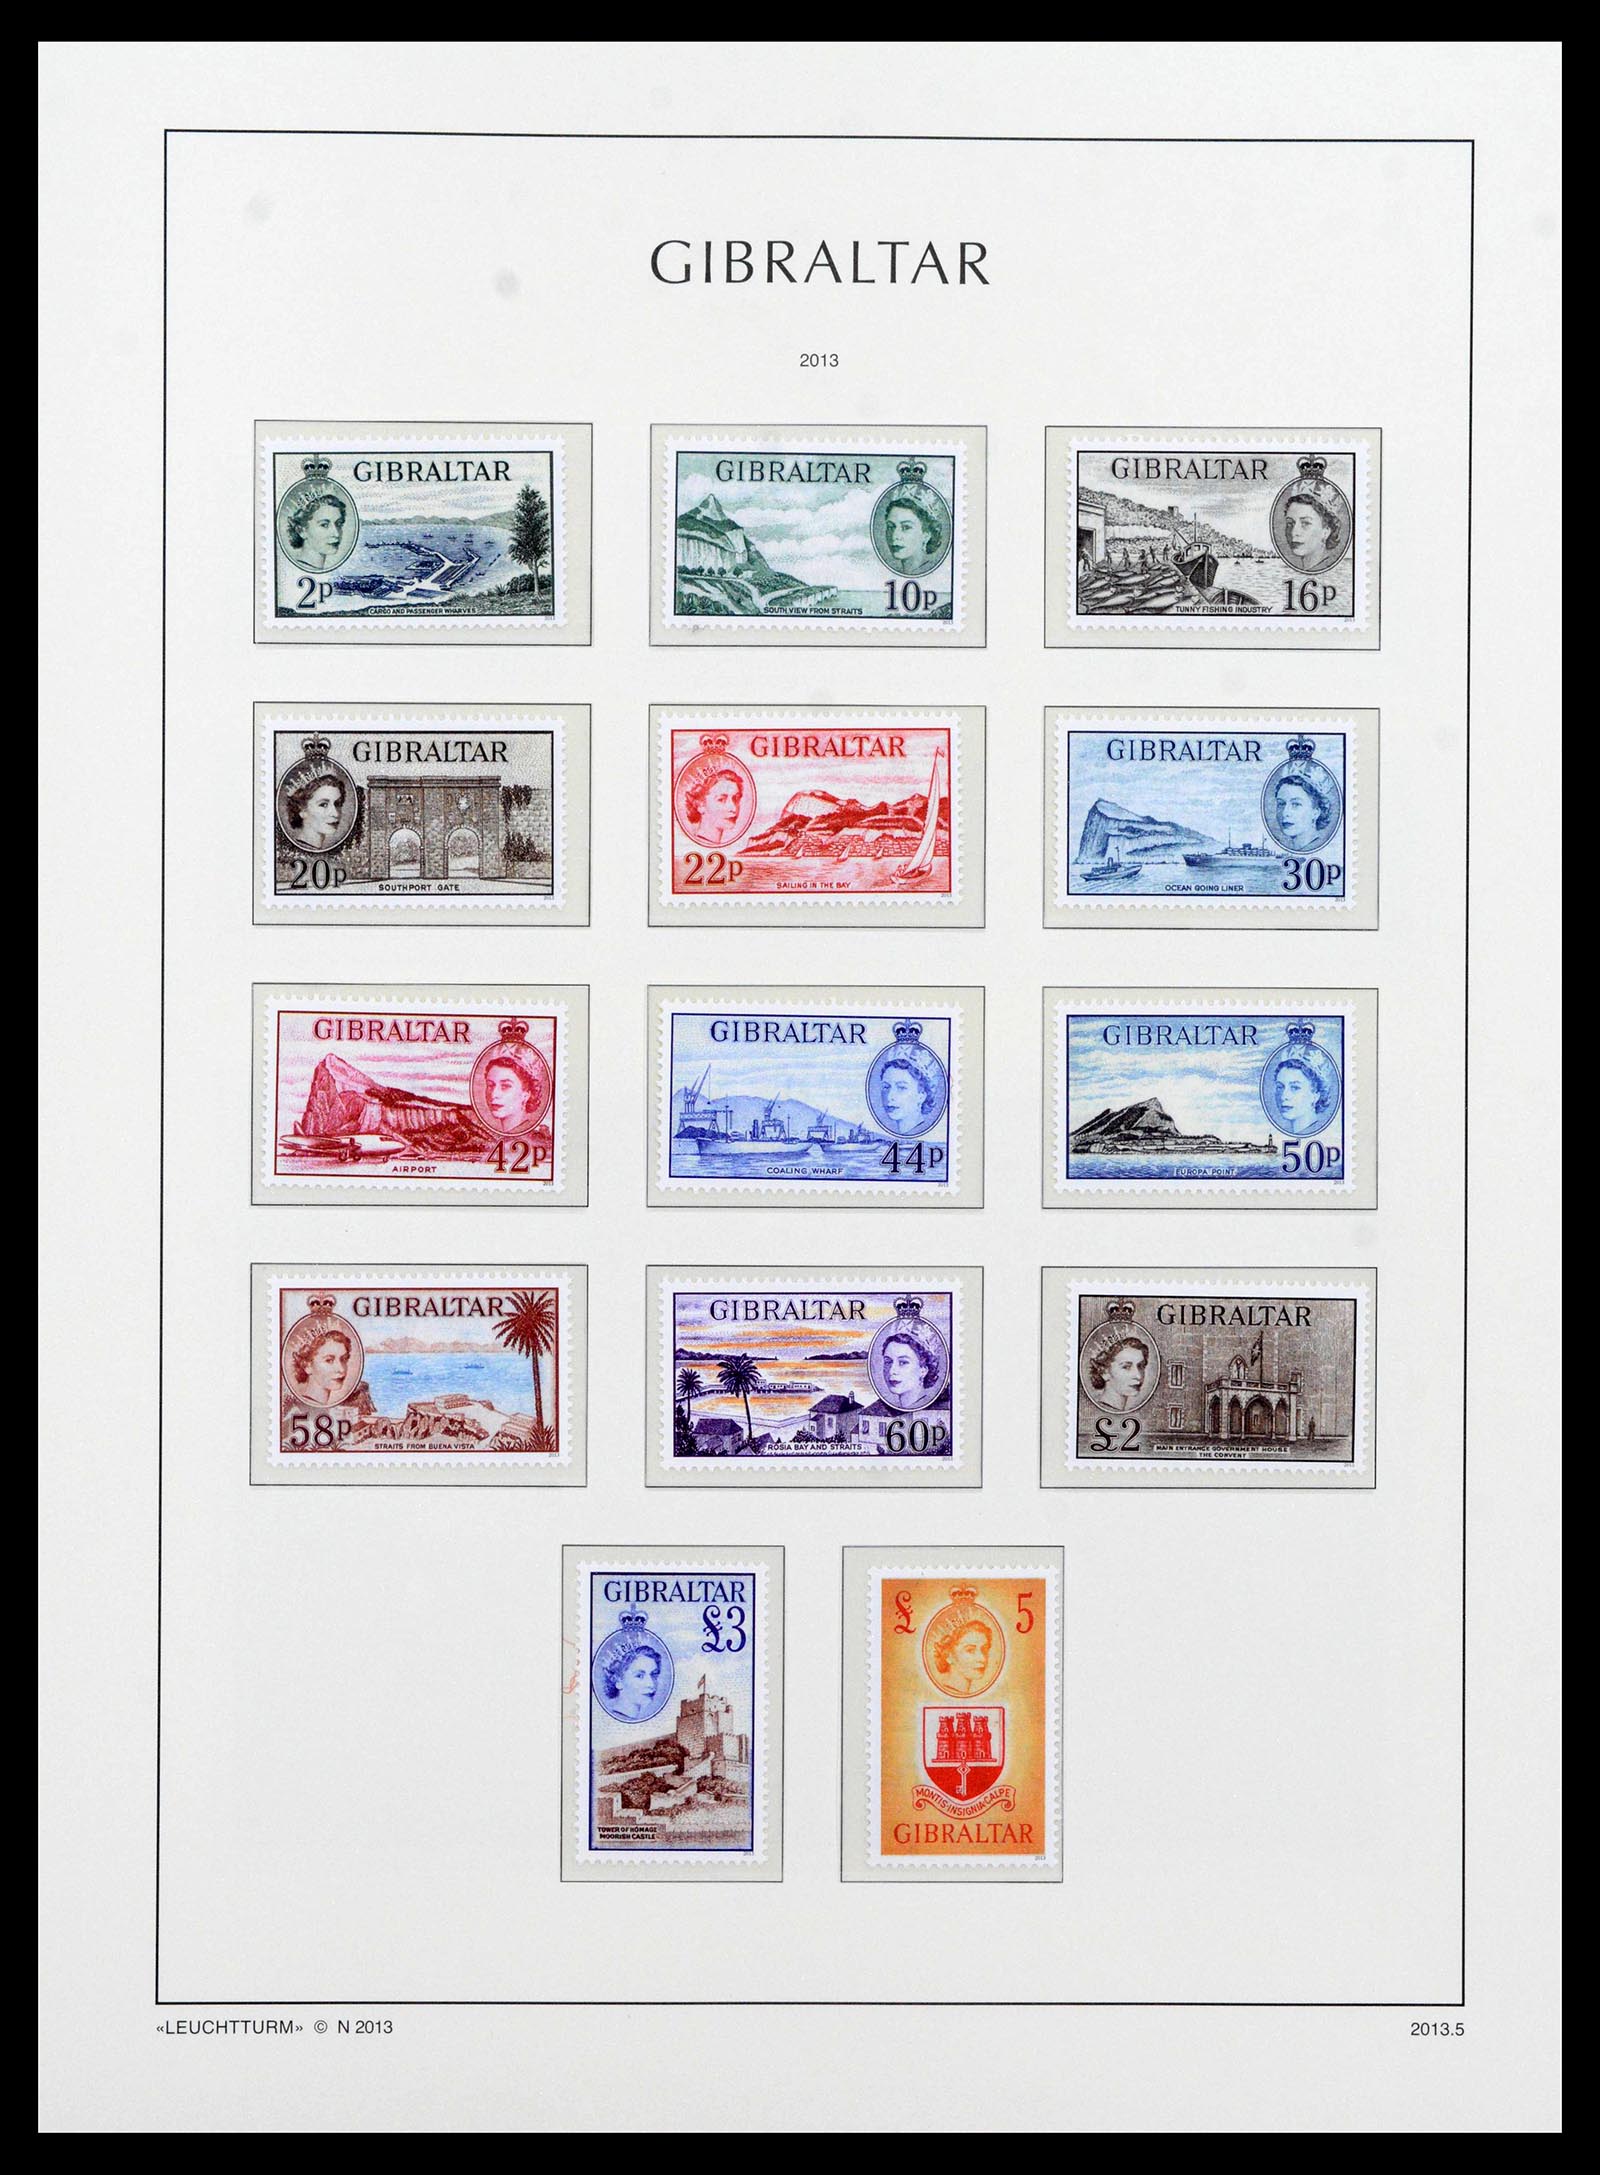 39158 0204 - Stamp collection 39158 Gibraltar 1886-2013.